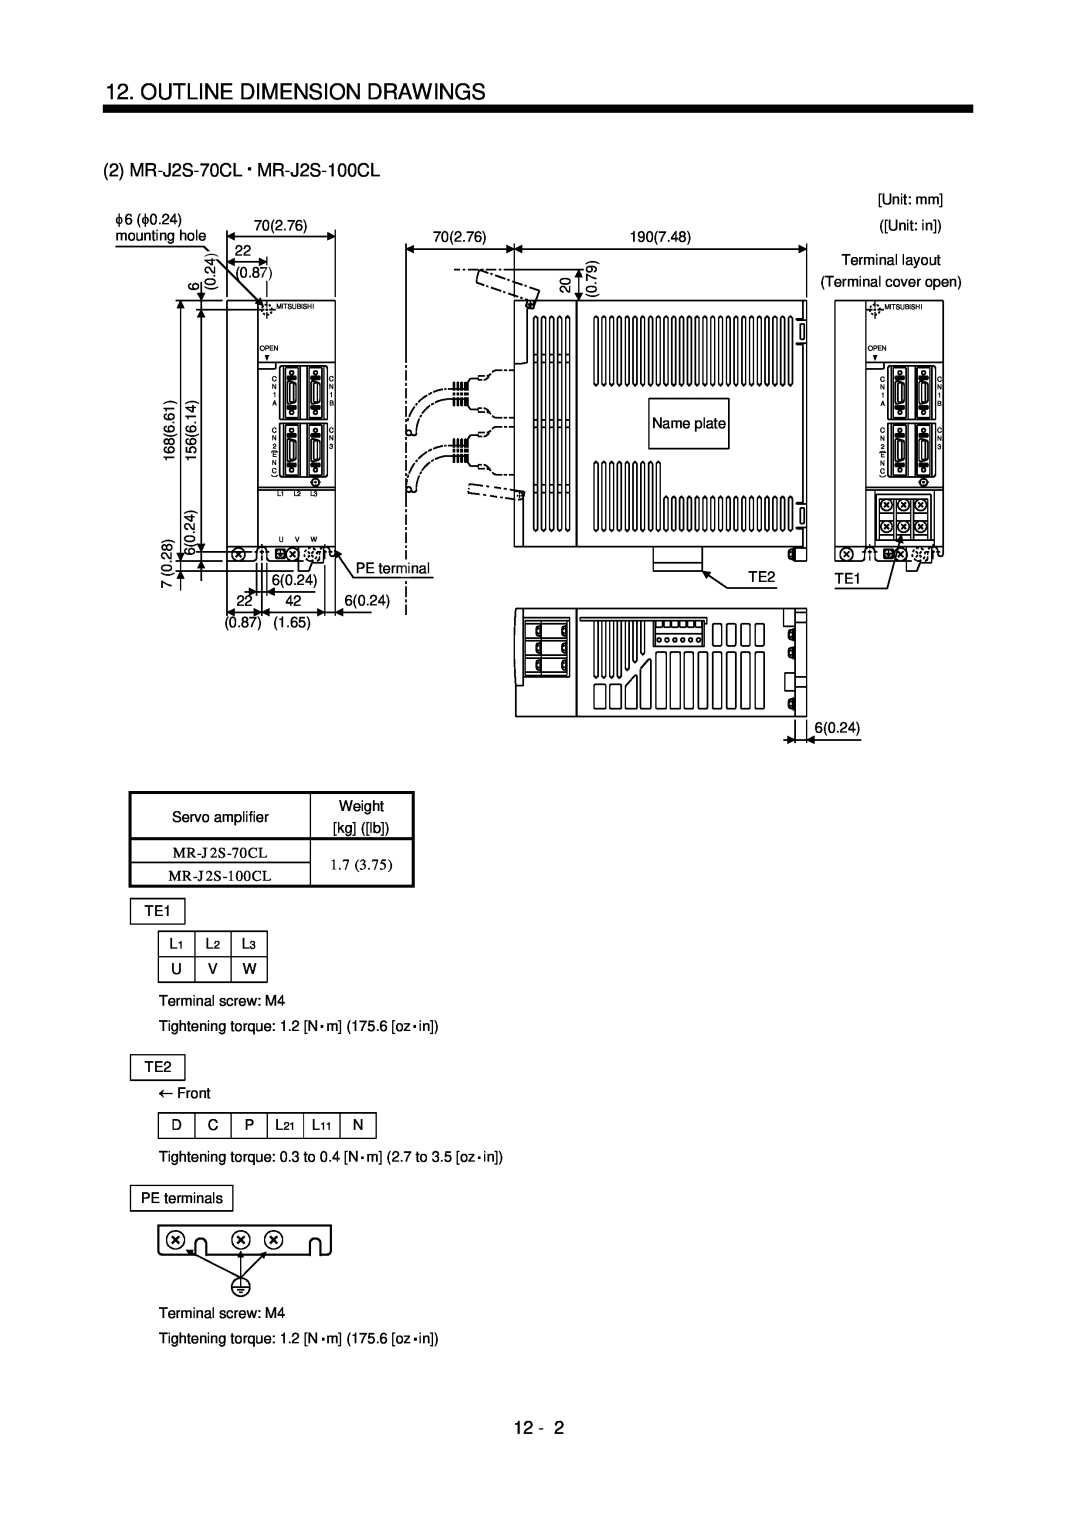 Mitsubishi Electronics MR-J2S- CL specifications Outline Dimension Drawings, MR-J2S-70CL, MR-J2S-100CL, 12 